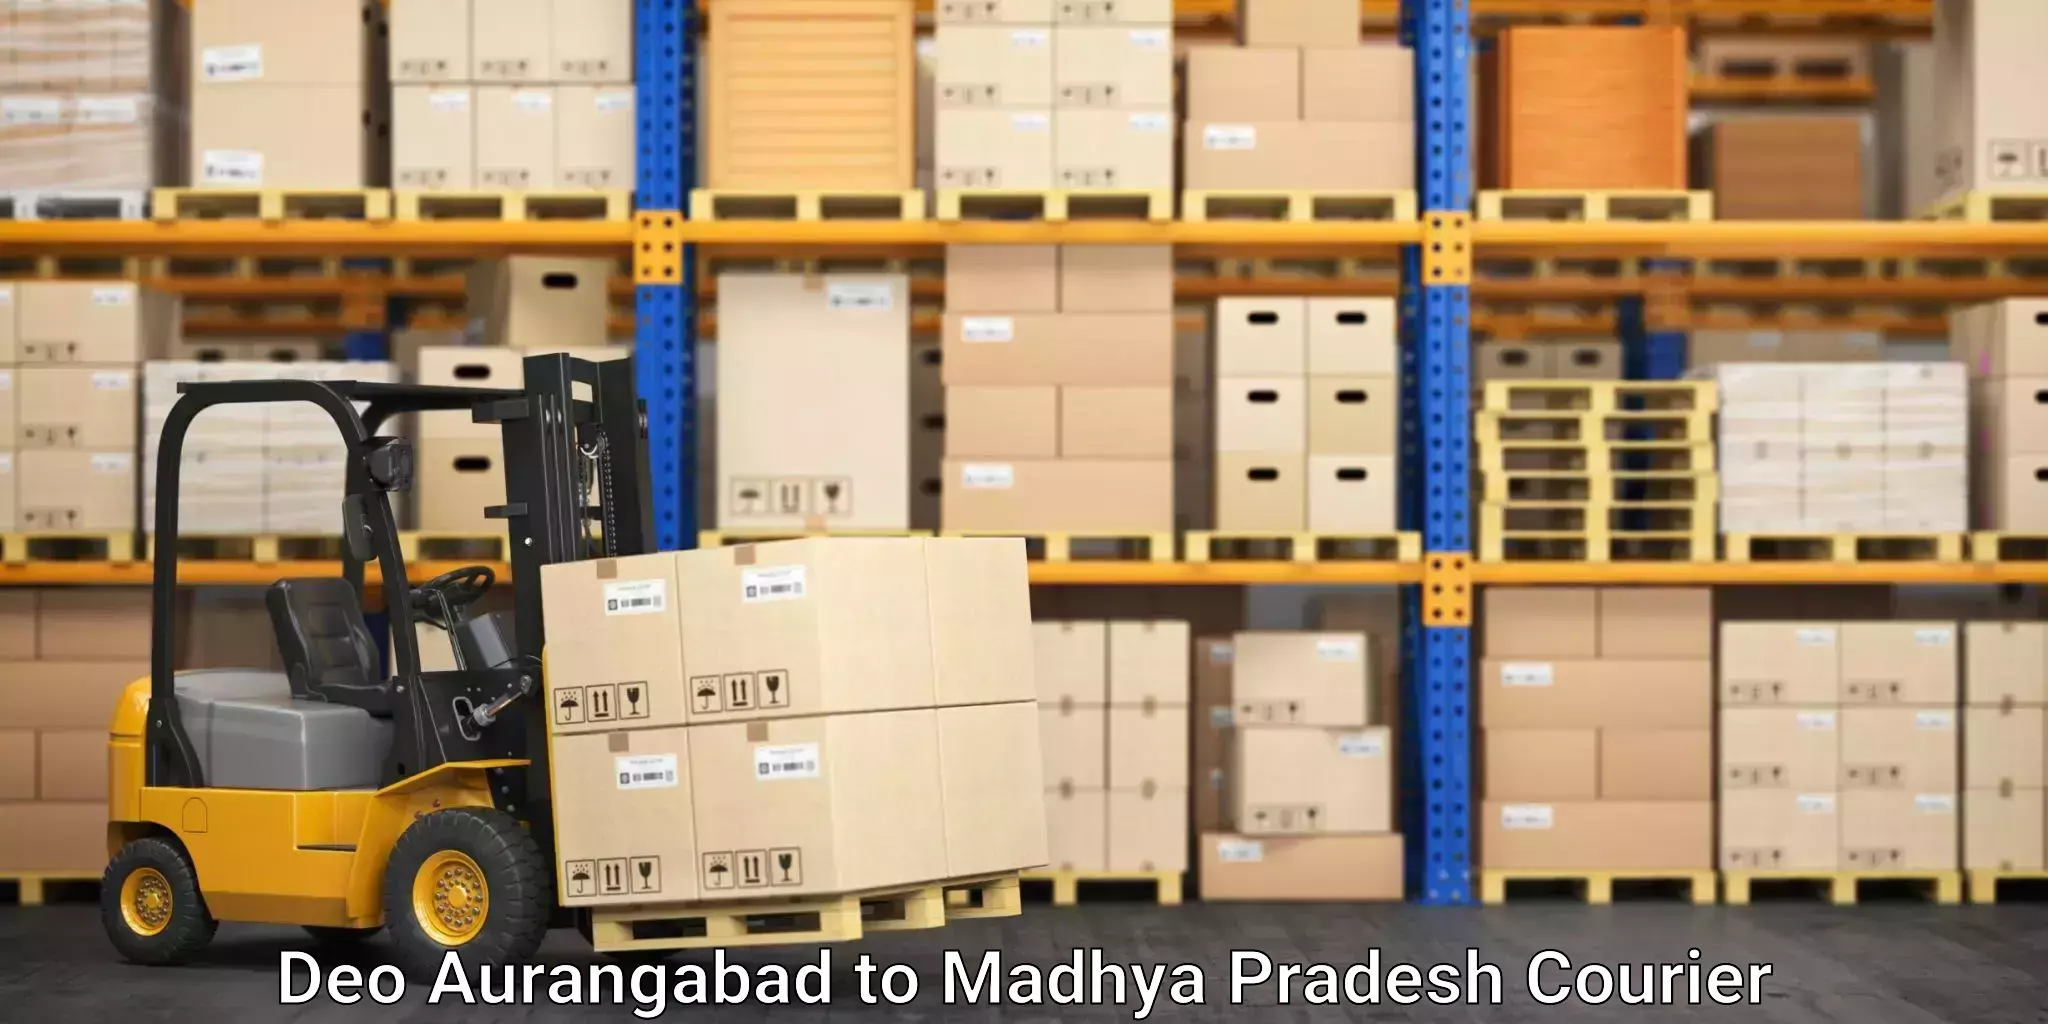 Long-distance moving services Deo Aurangabad to Madhya Pradesh